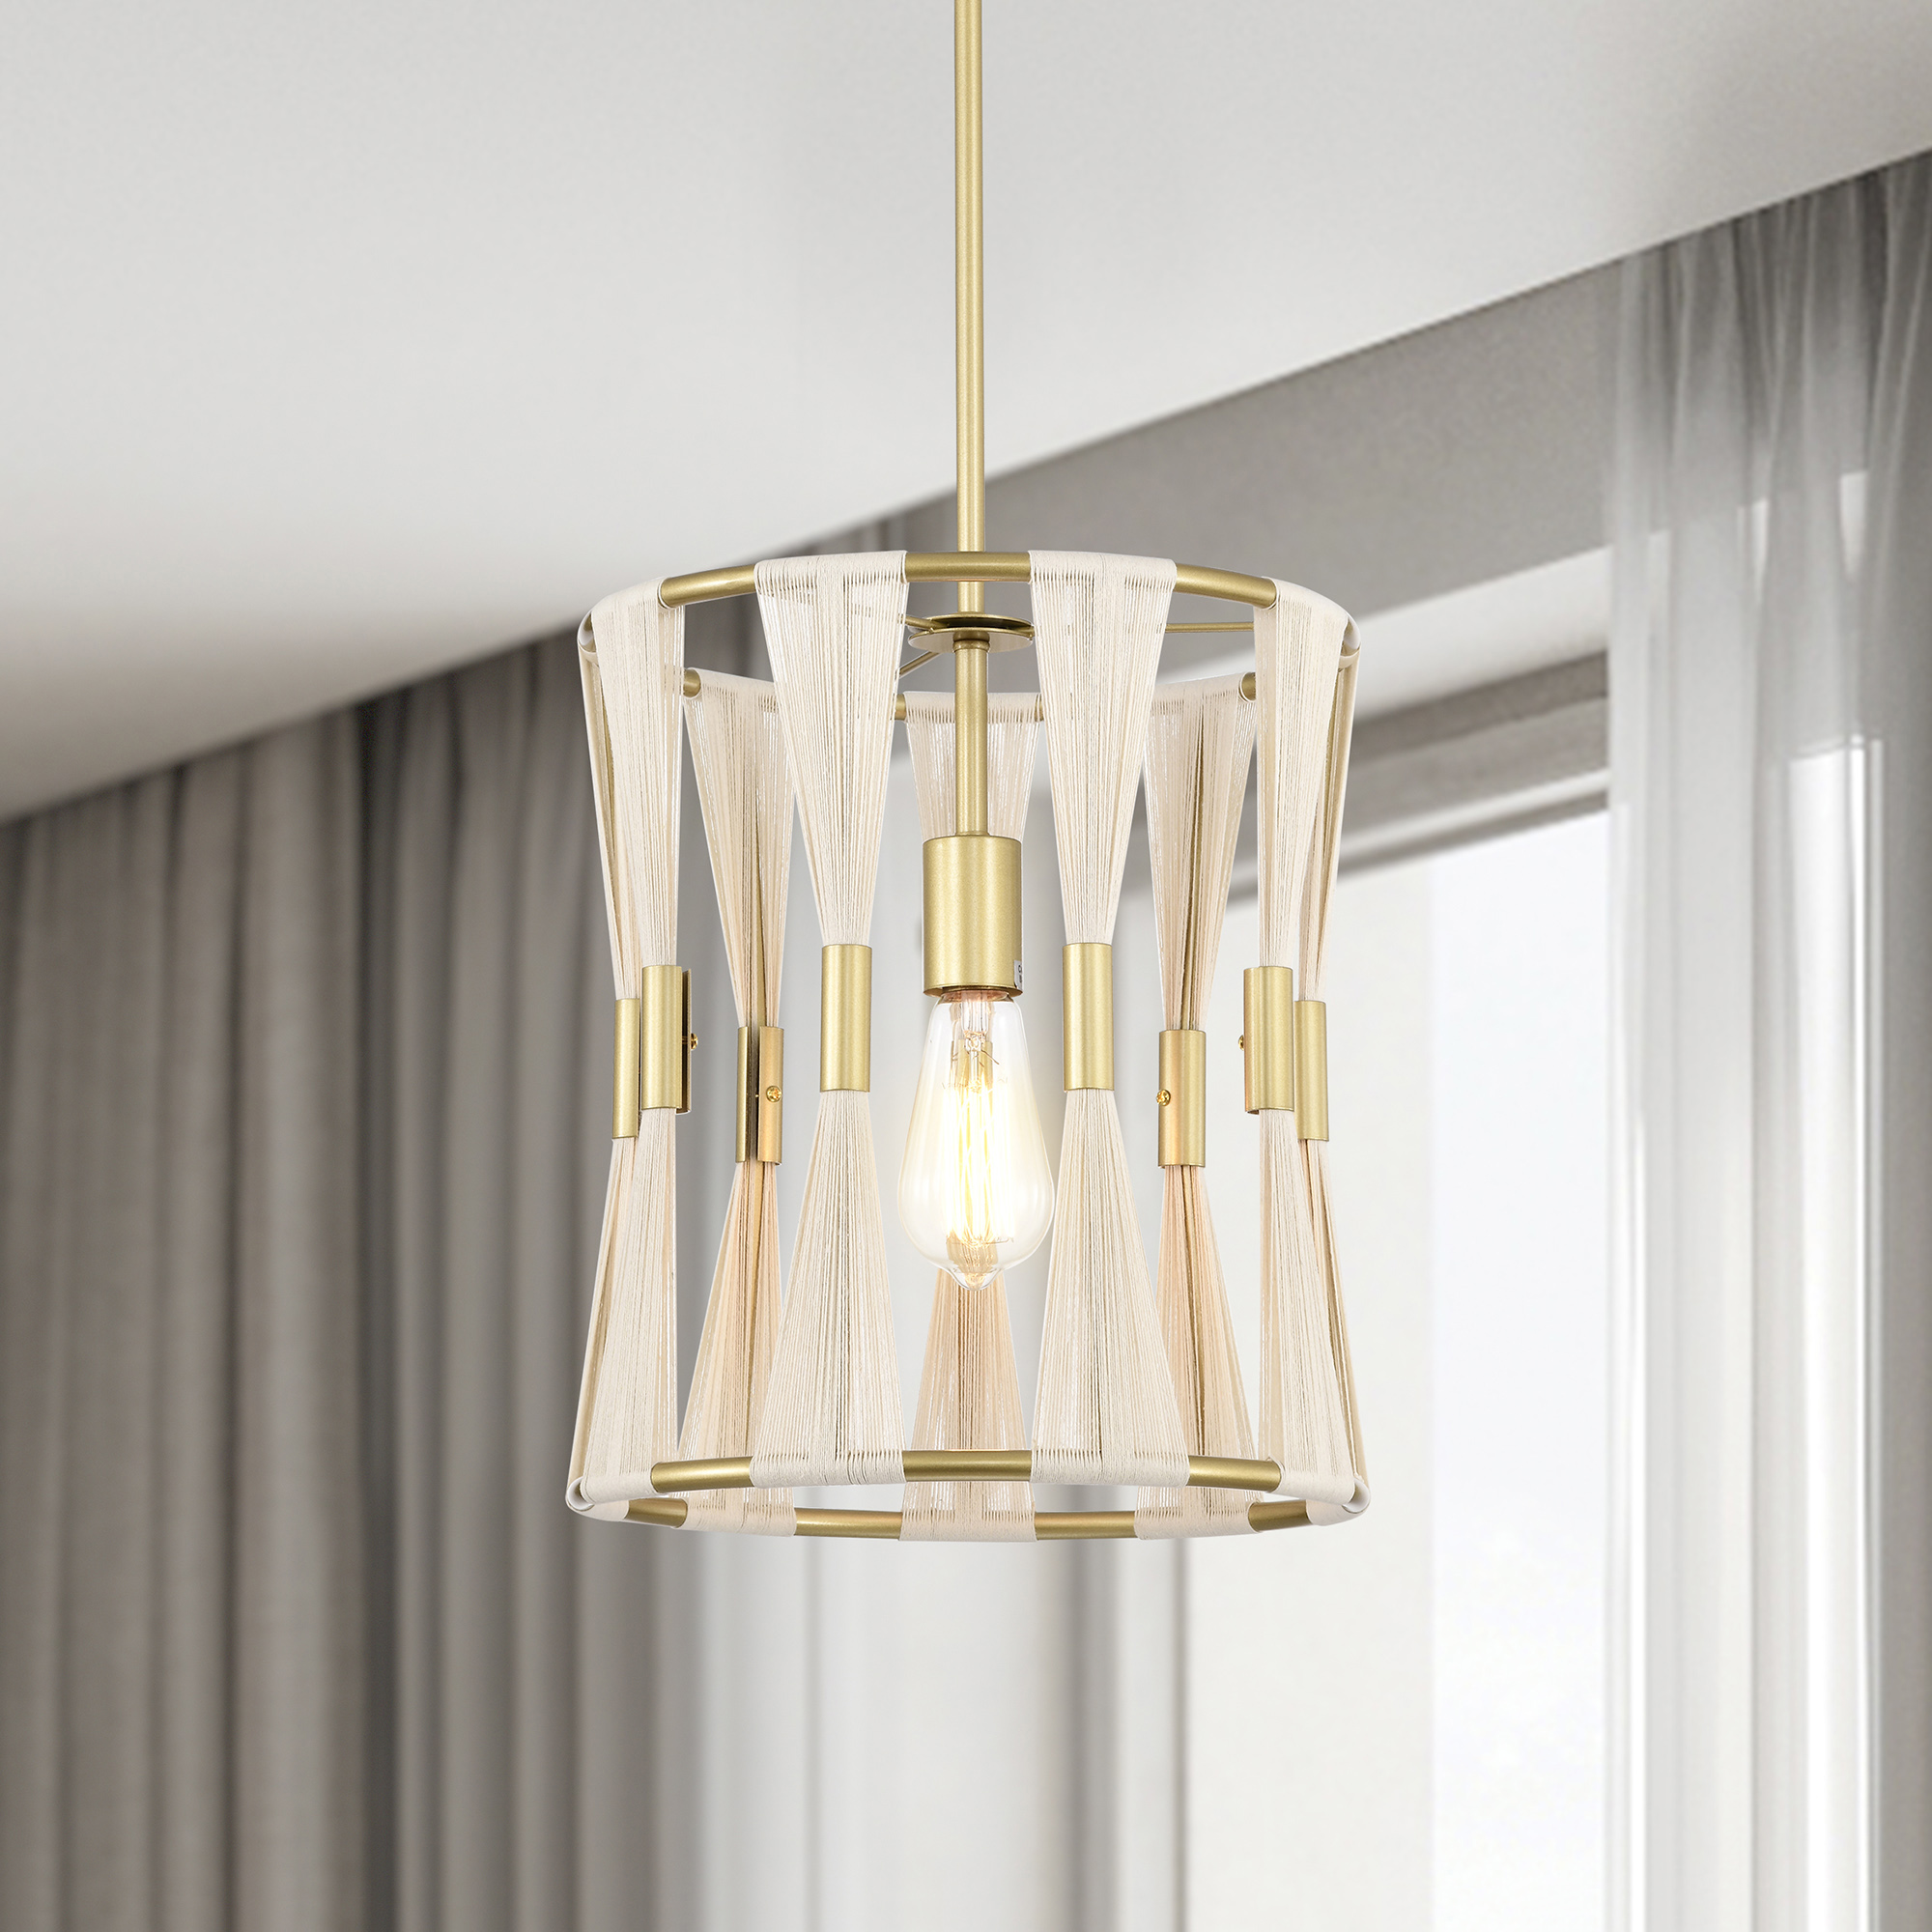 Amara 12 in. 1-Light Indoor Brass Finish Pendant Light with Light Kit